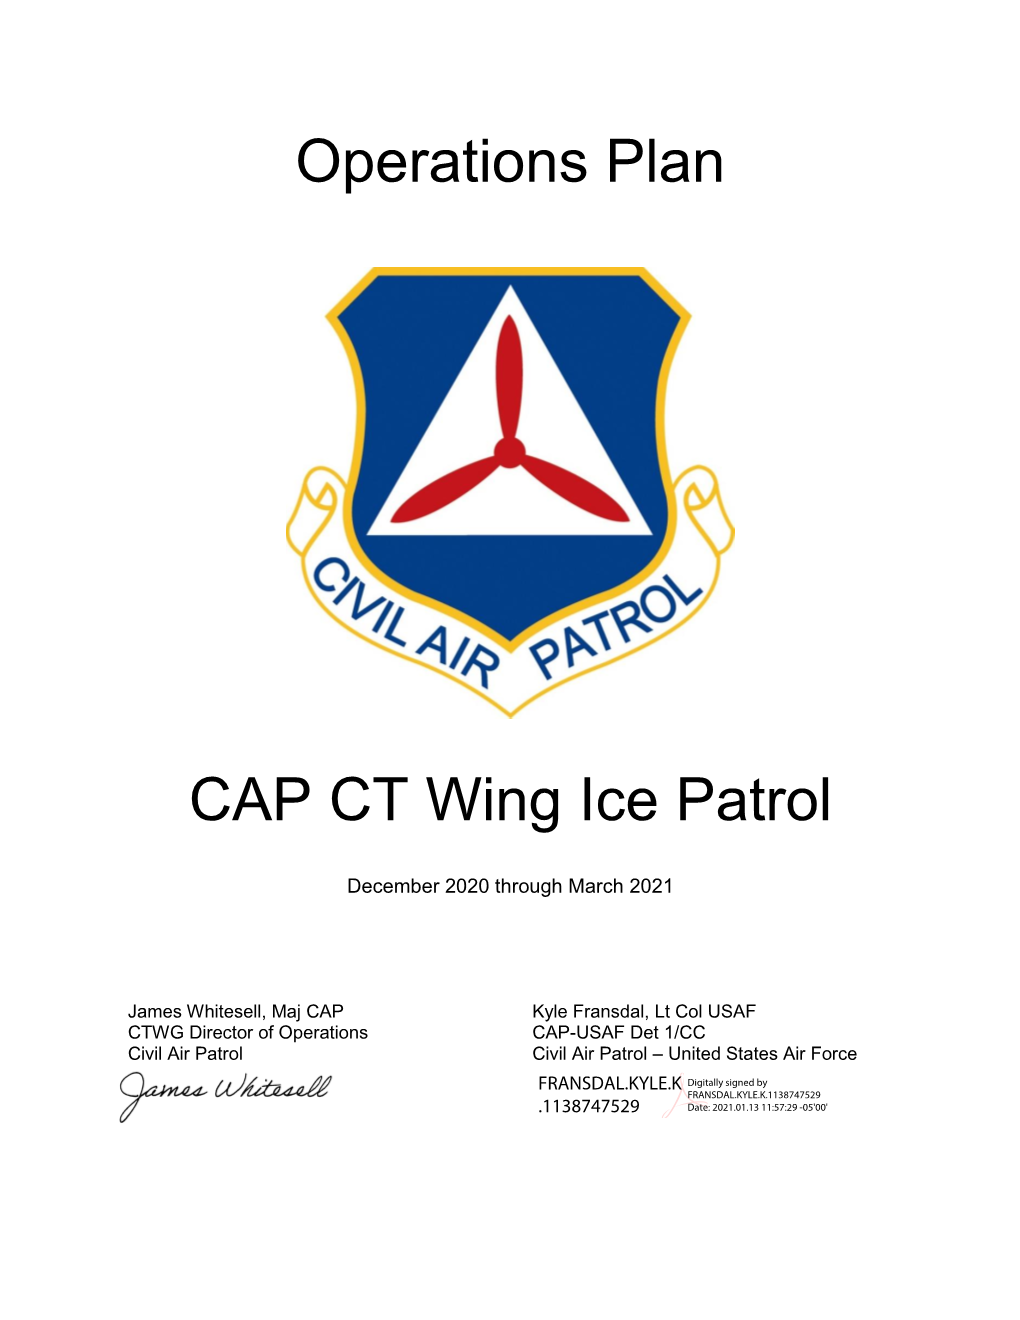 Operations Plan CAP CT Wing Ice Patrol